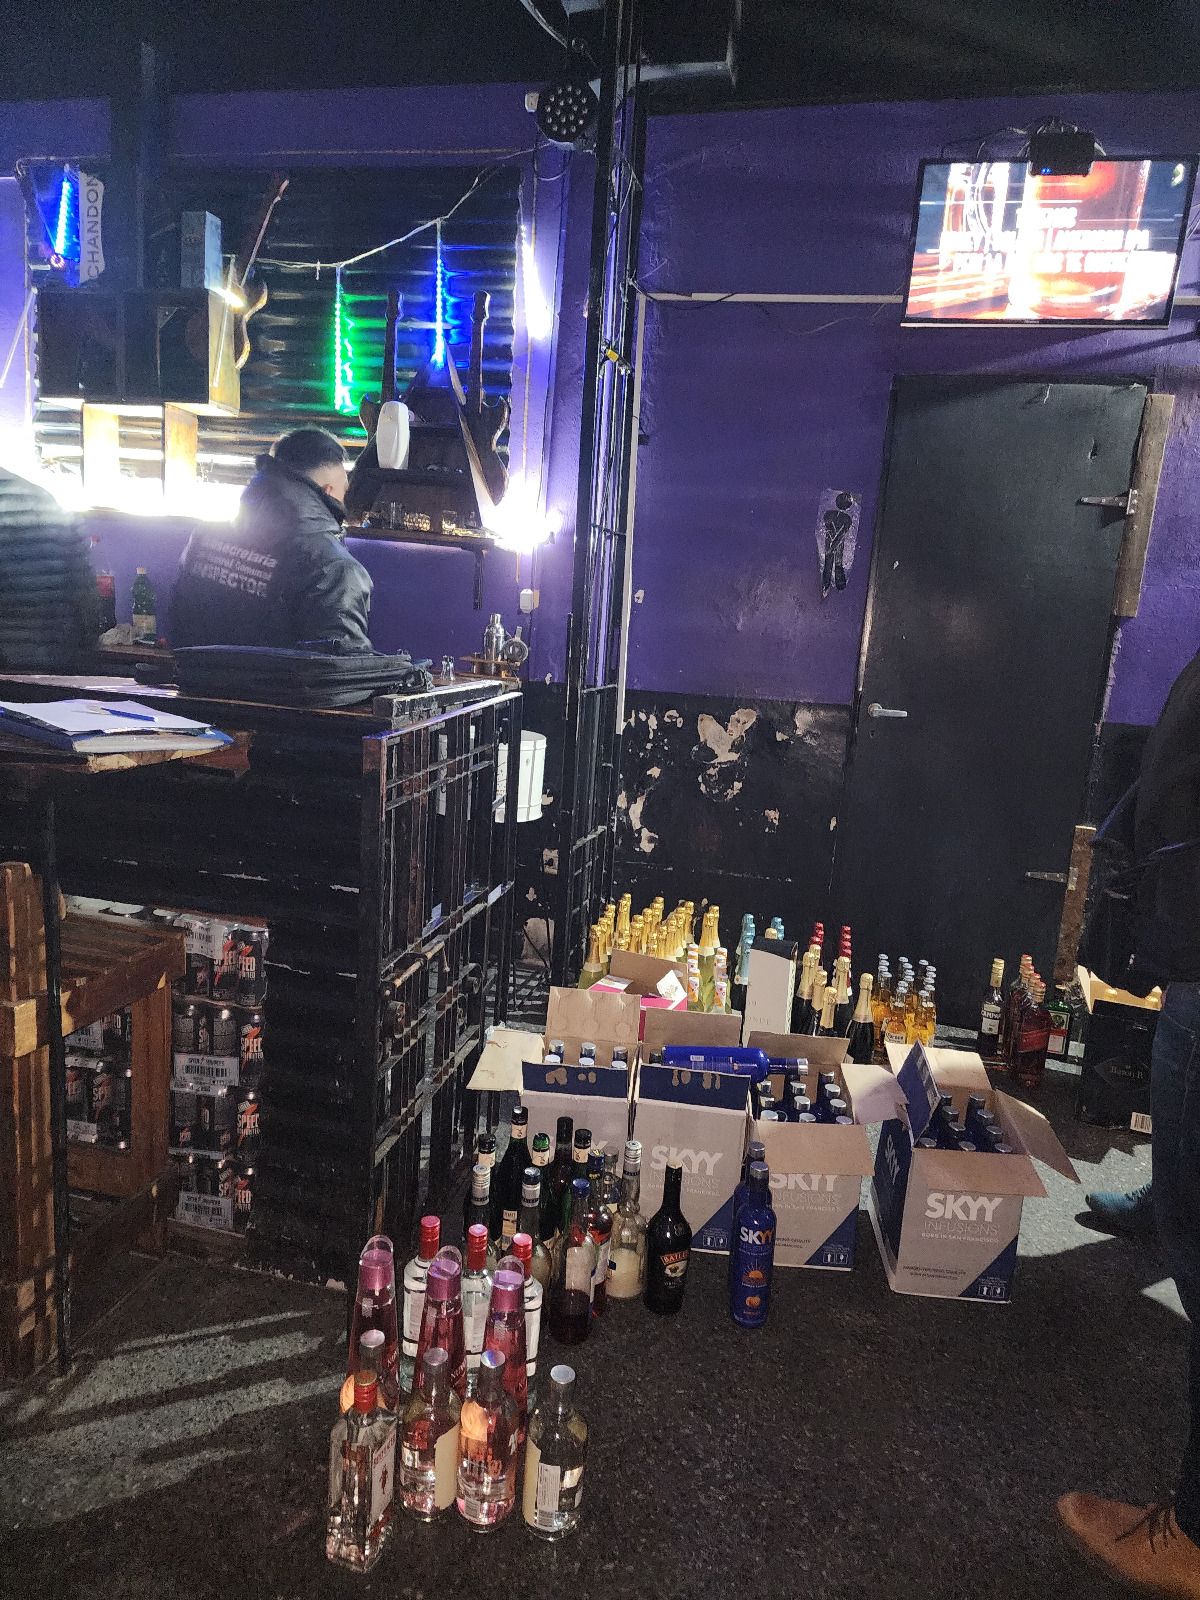 Clausuraron un bar de un policía en Lanús por irregularidades en su habilitación